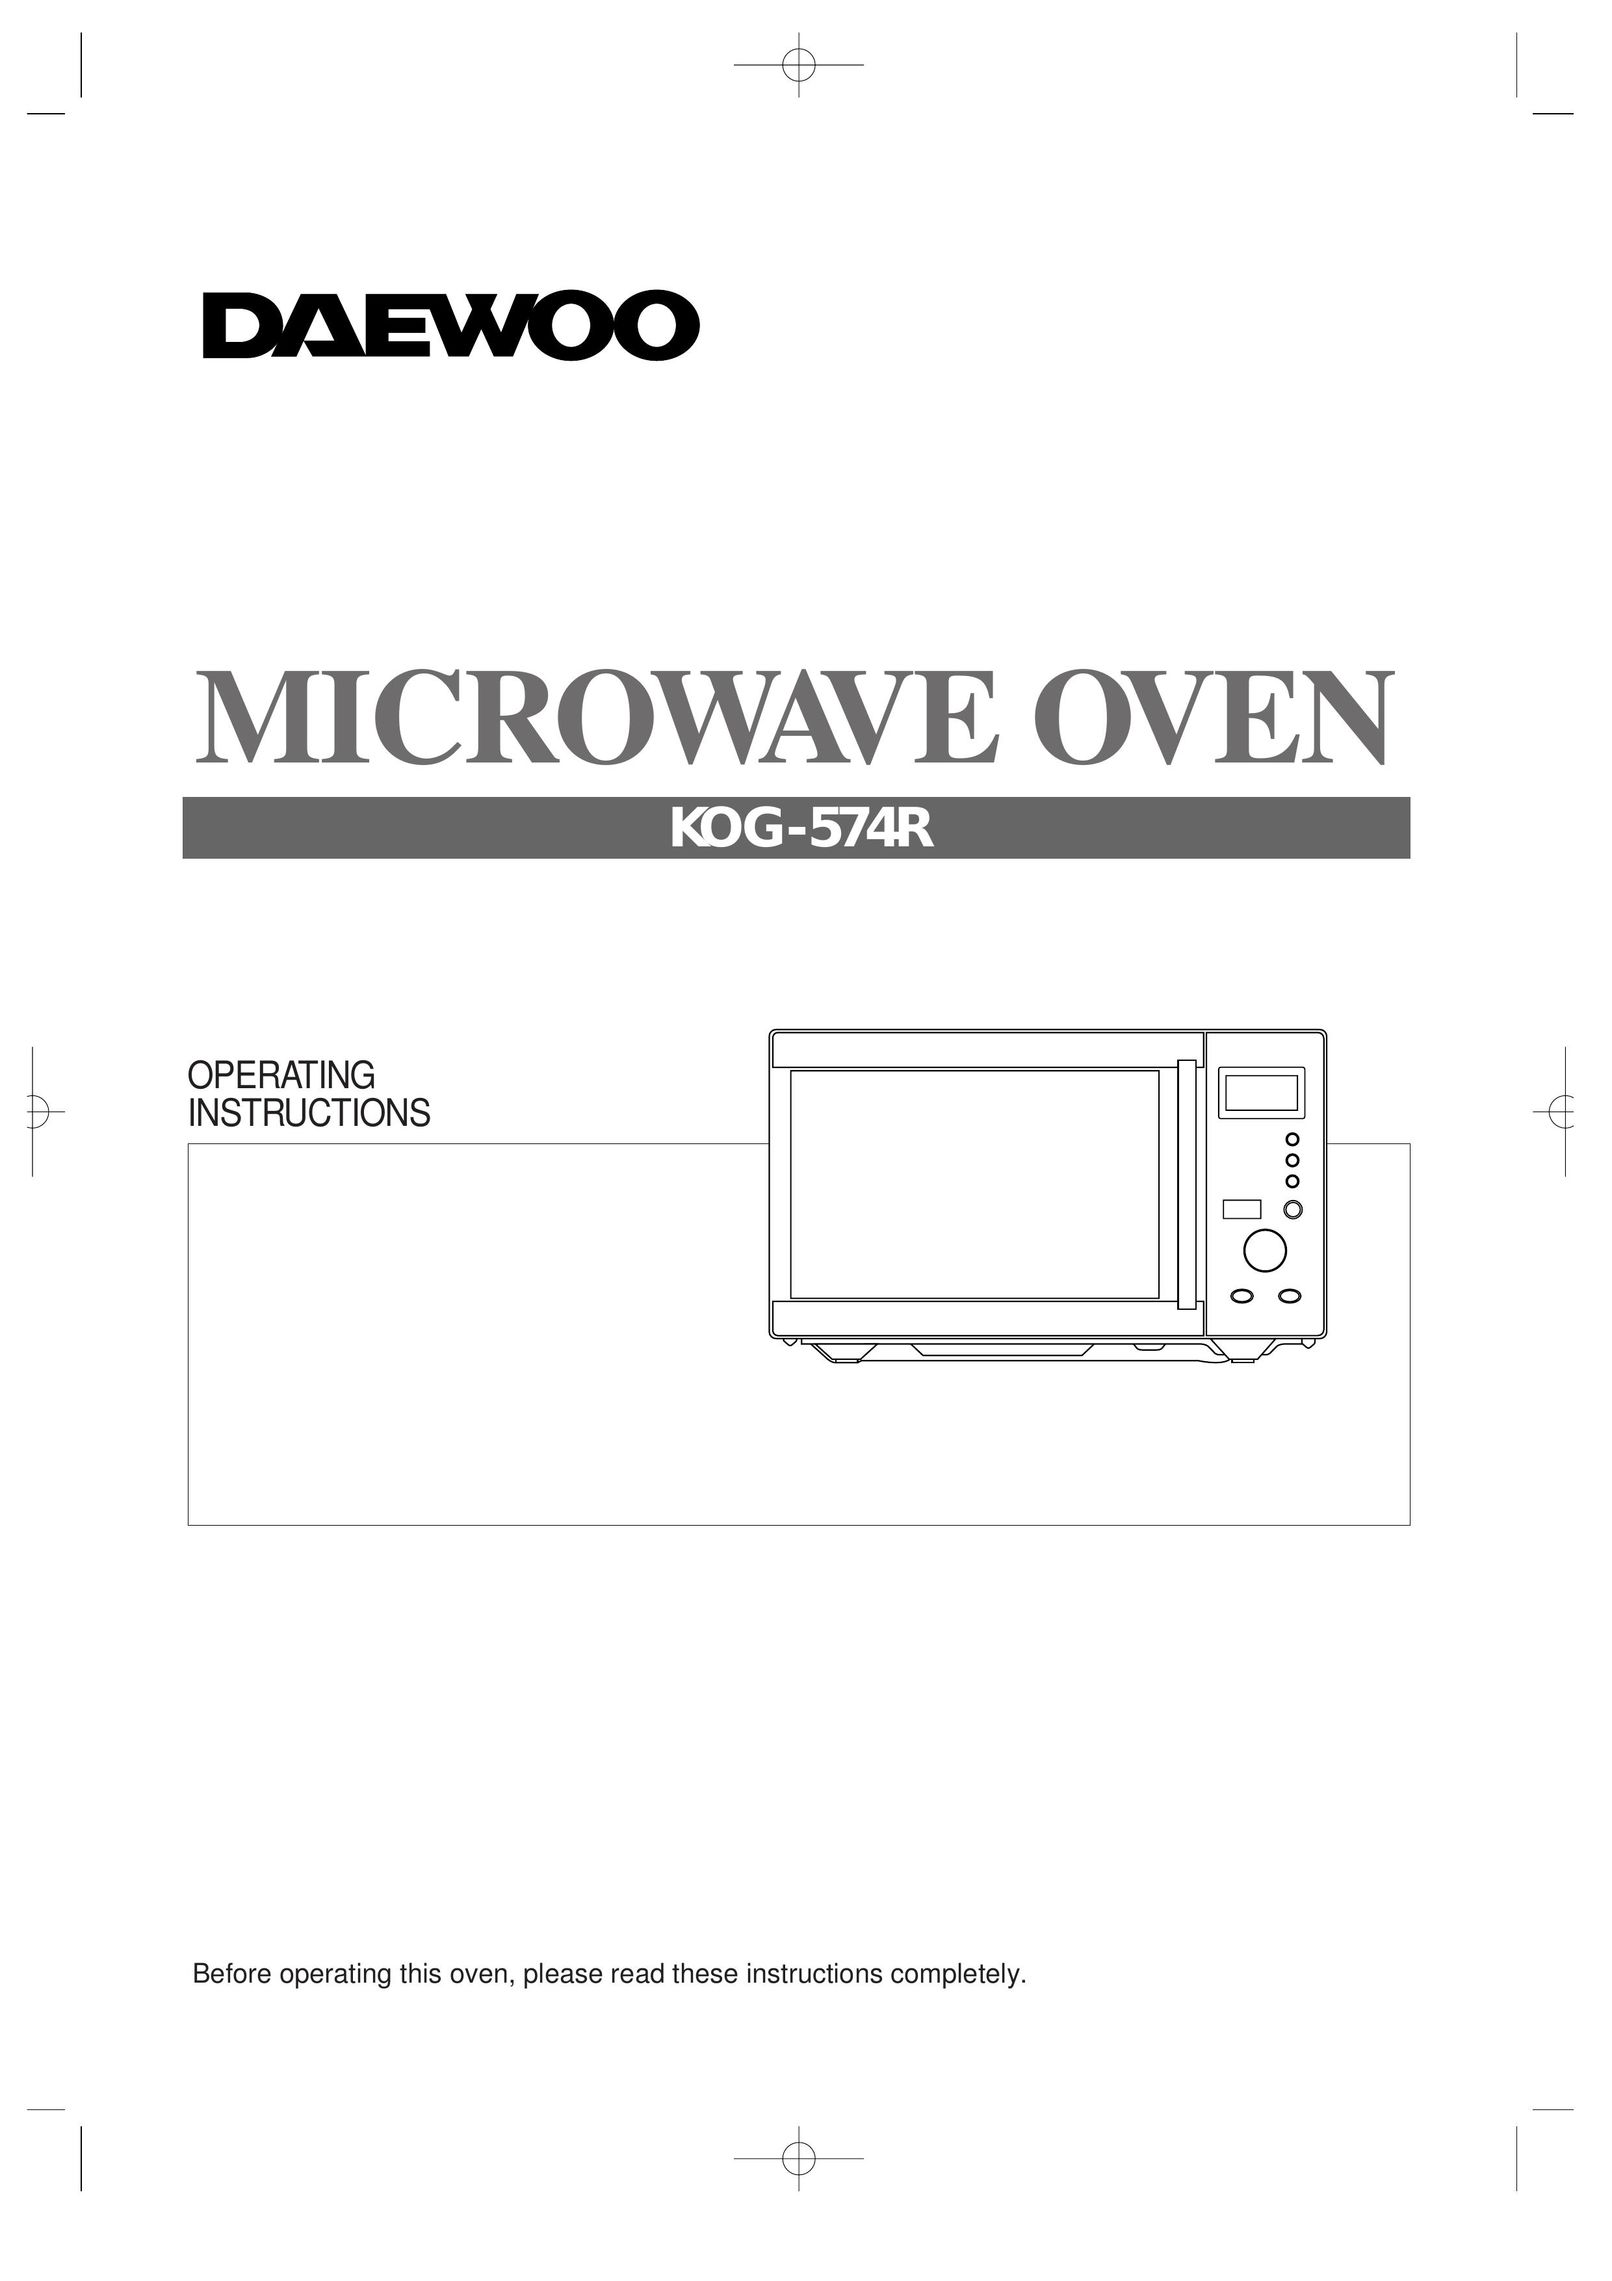 Daewoo KOG-574R Microwave Oven User Manual